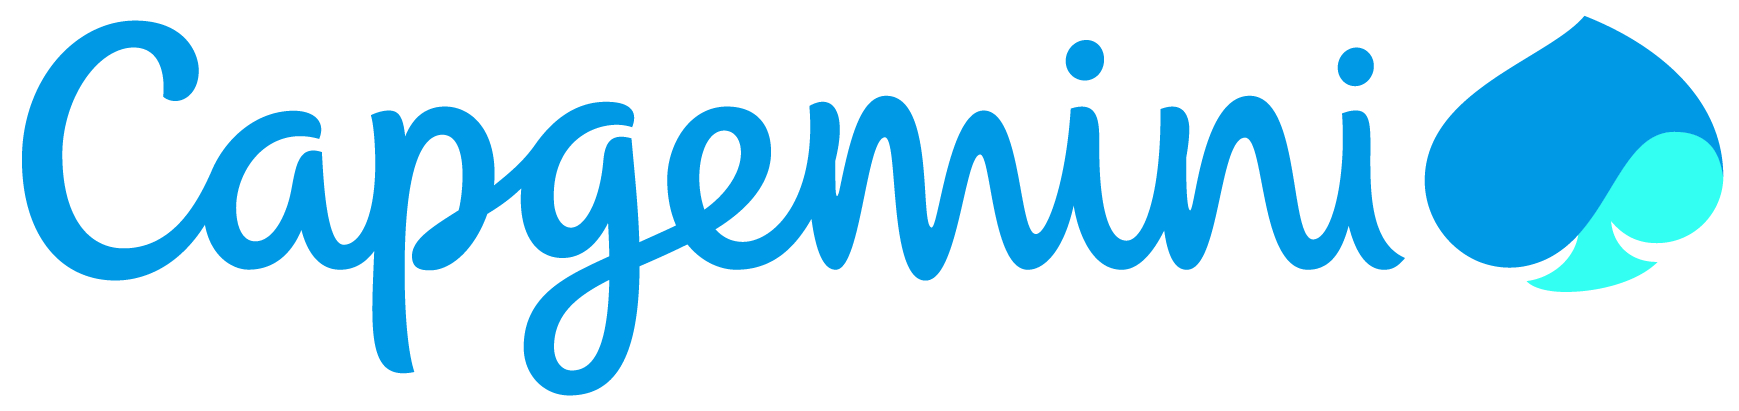 Capgemini logo in blue cursive writing